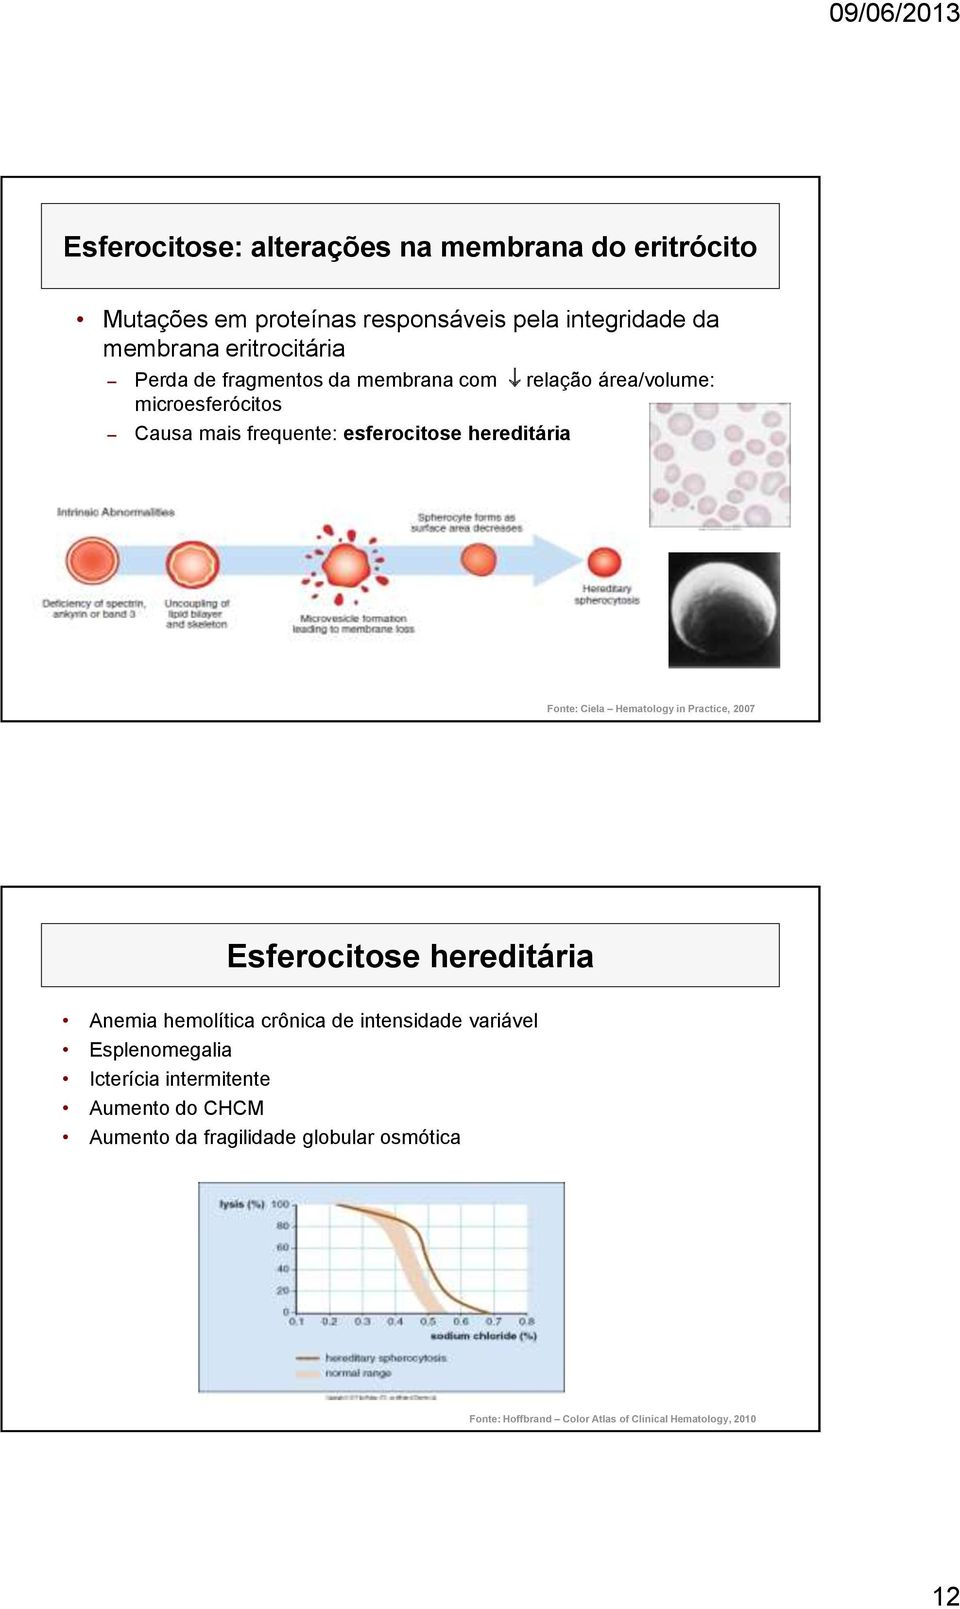 Ciela Hematology in Practice, 2007 Esferocitose hereditária Anemia hemolítica crônica de intensidade variável Esplenomegalia